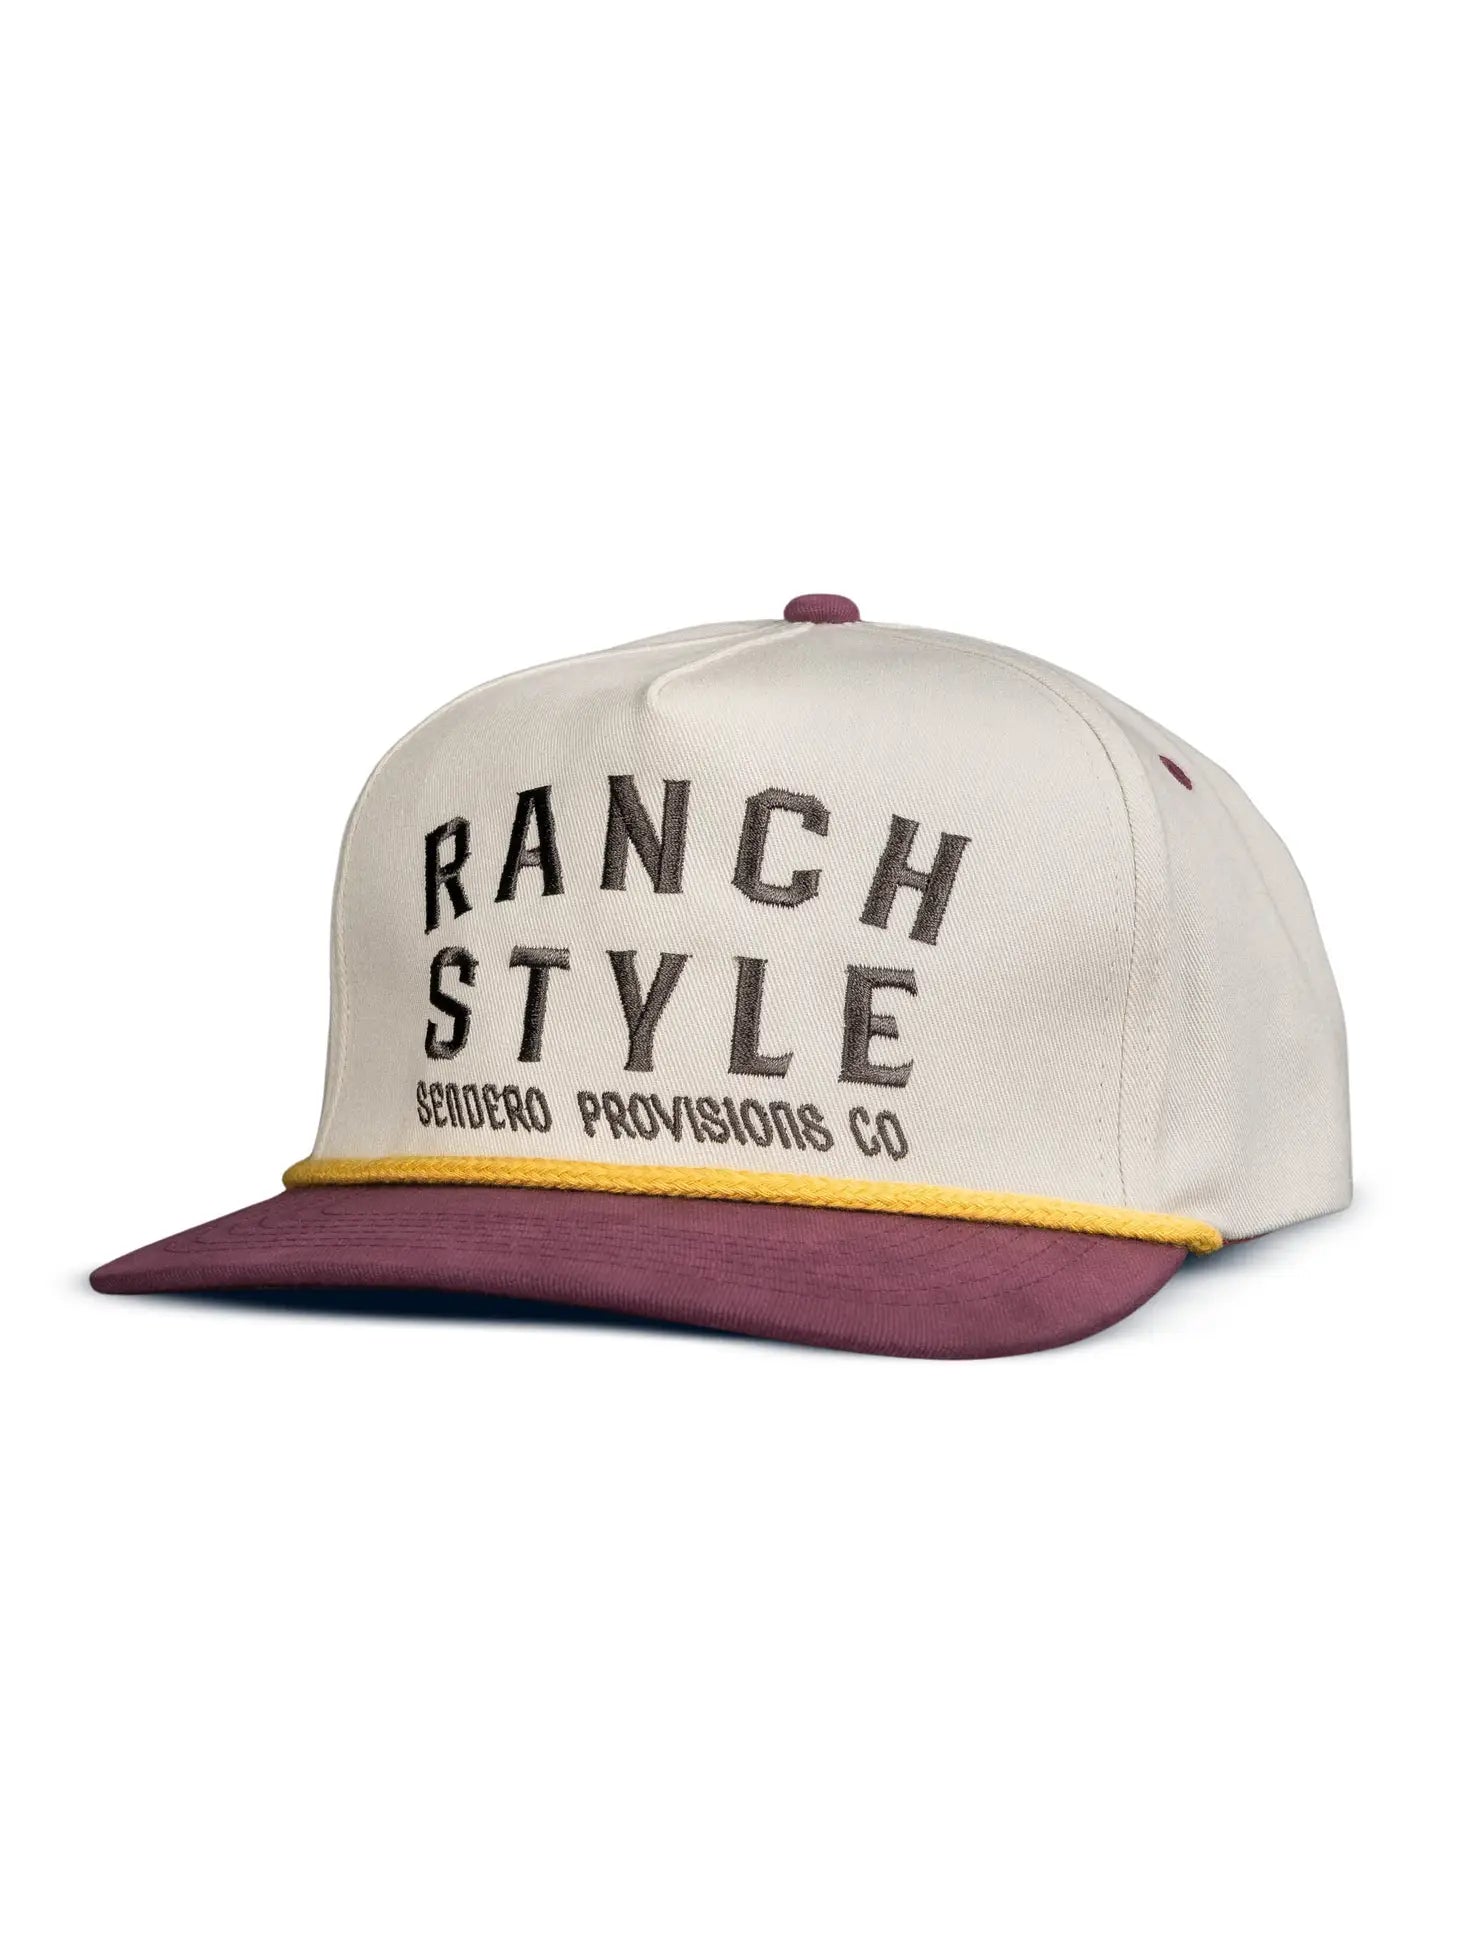 Sendero Provisions Ranch Style Cap-Hats-Deadwood South Boutique & Company-Deadwood South Boutique, Women's Fashion Boutique in Henderson, TX